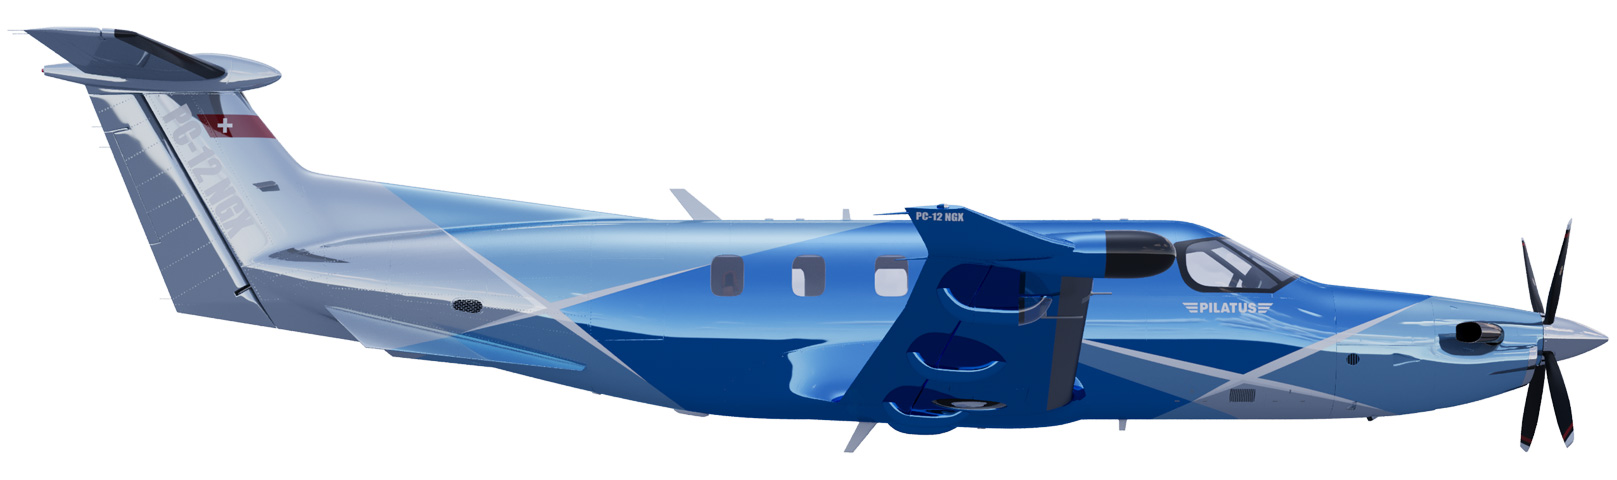 jetlife-aviation-flotte-pilatus-ngx12-cover-blue